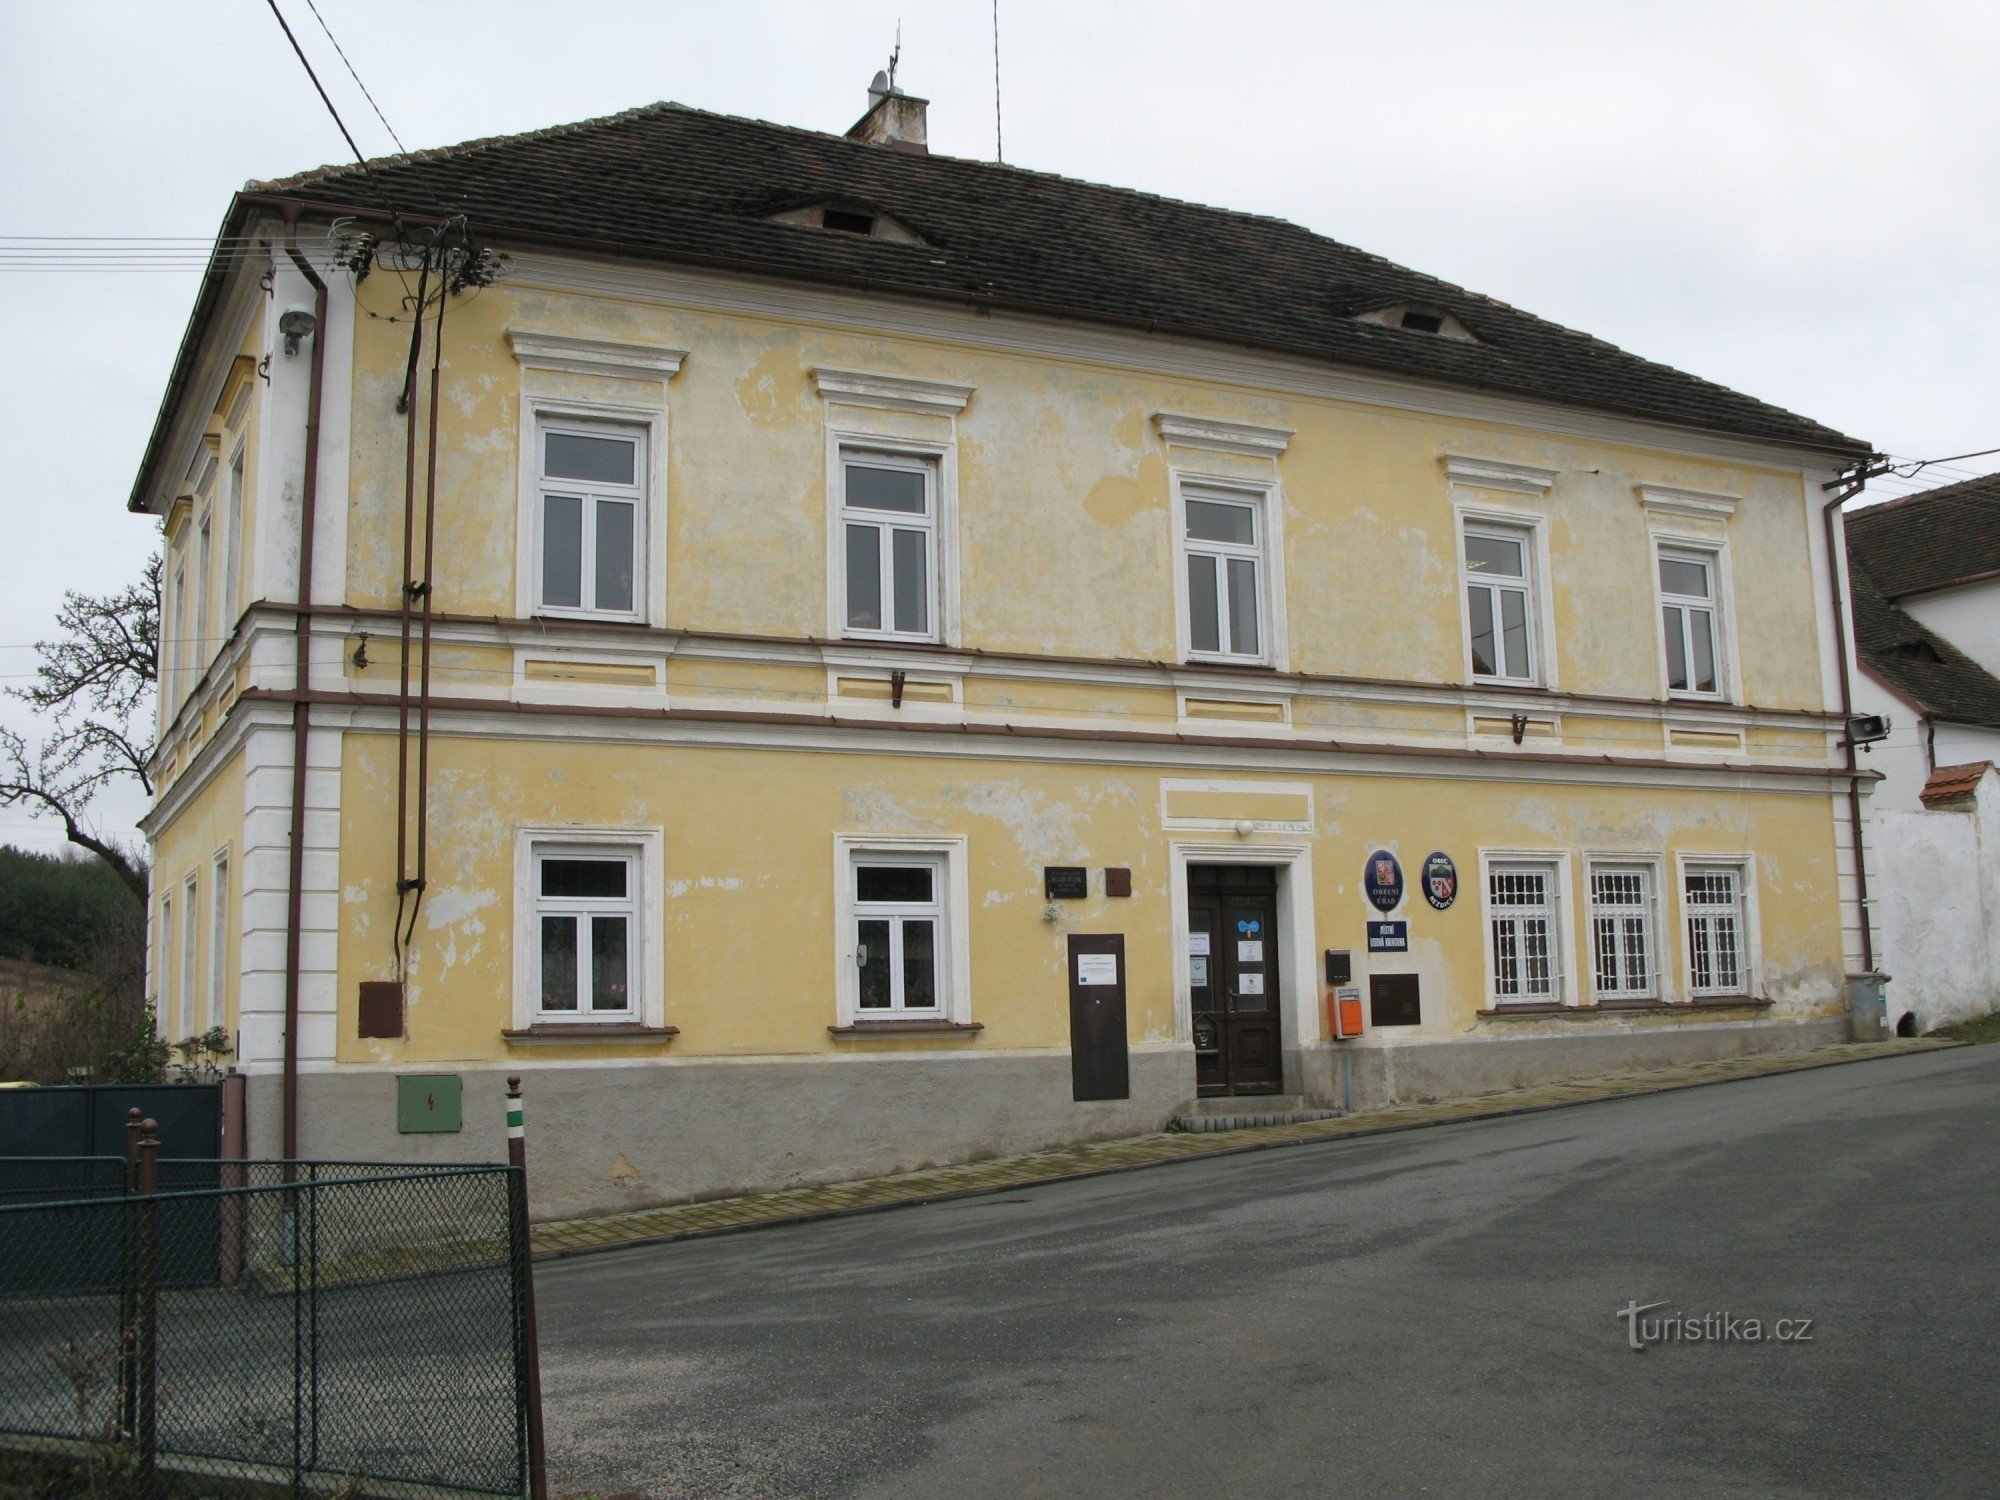 Nezdice - oficina municipal, antigua escuela municipal de 1847